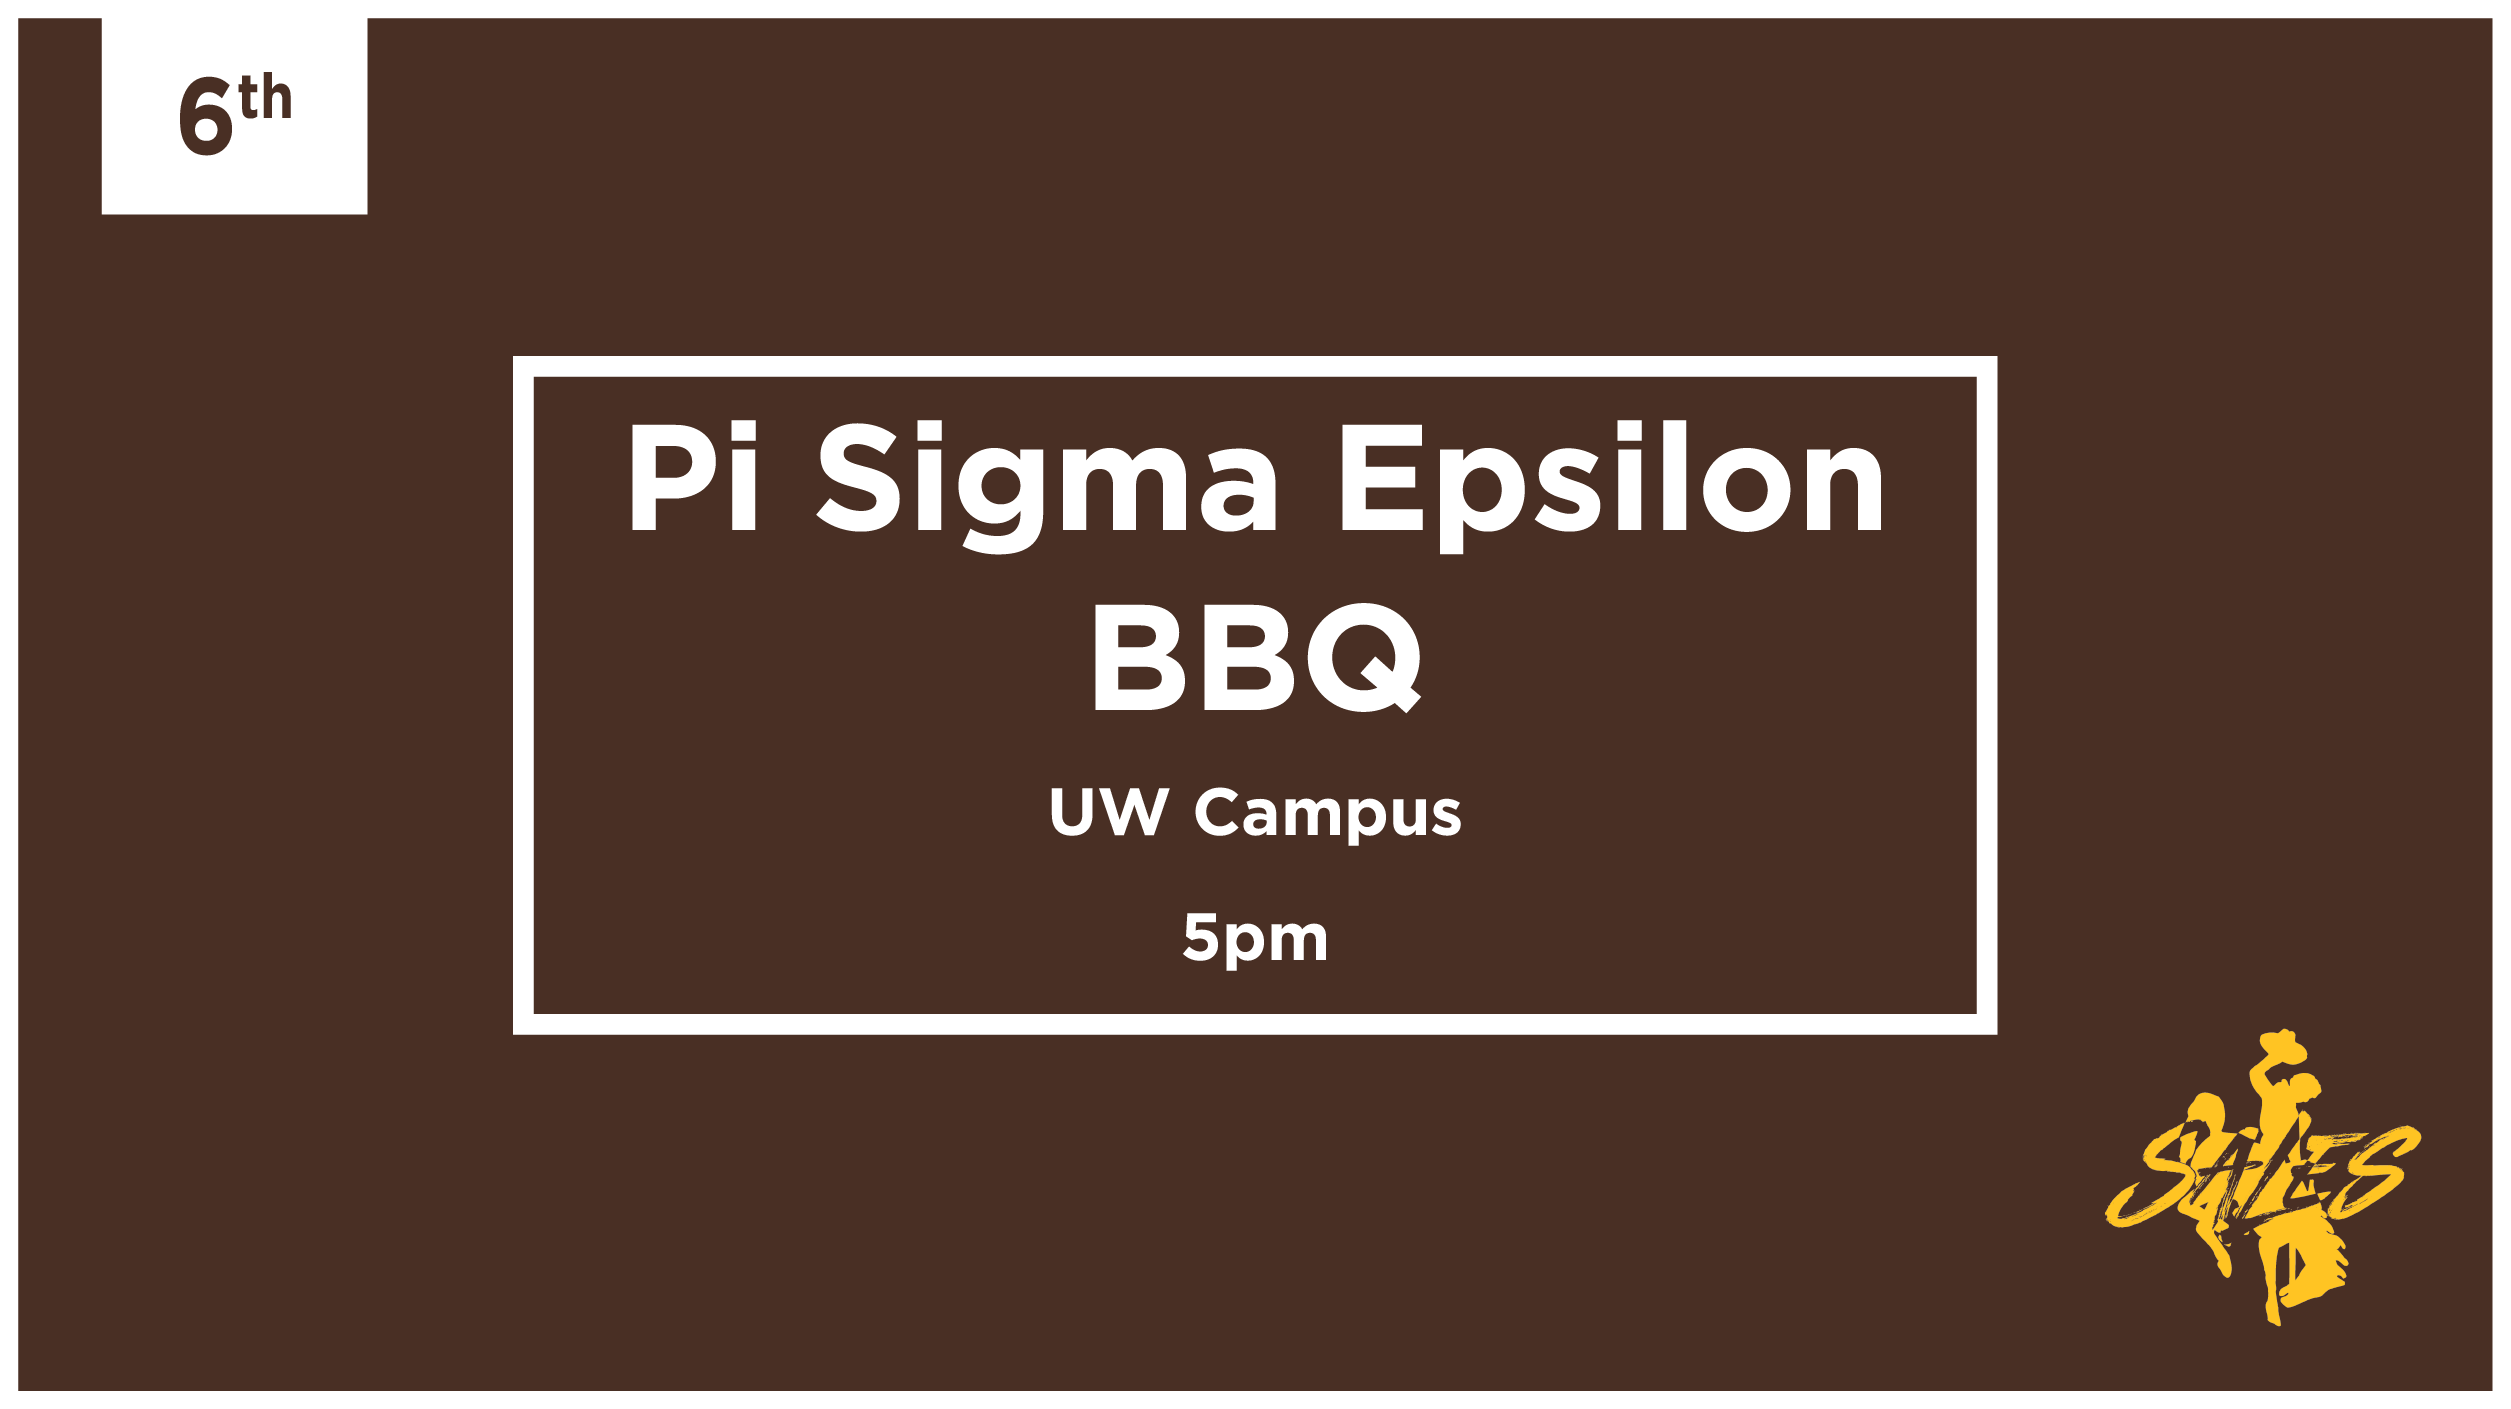 Pi Sigma Epsilon BBQ September 6th